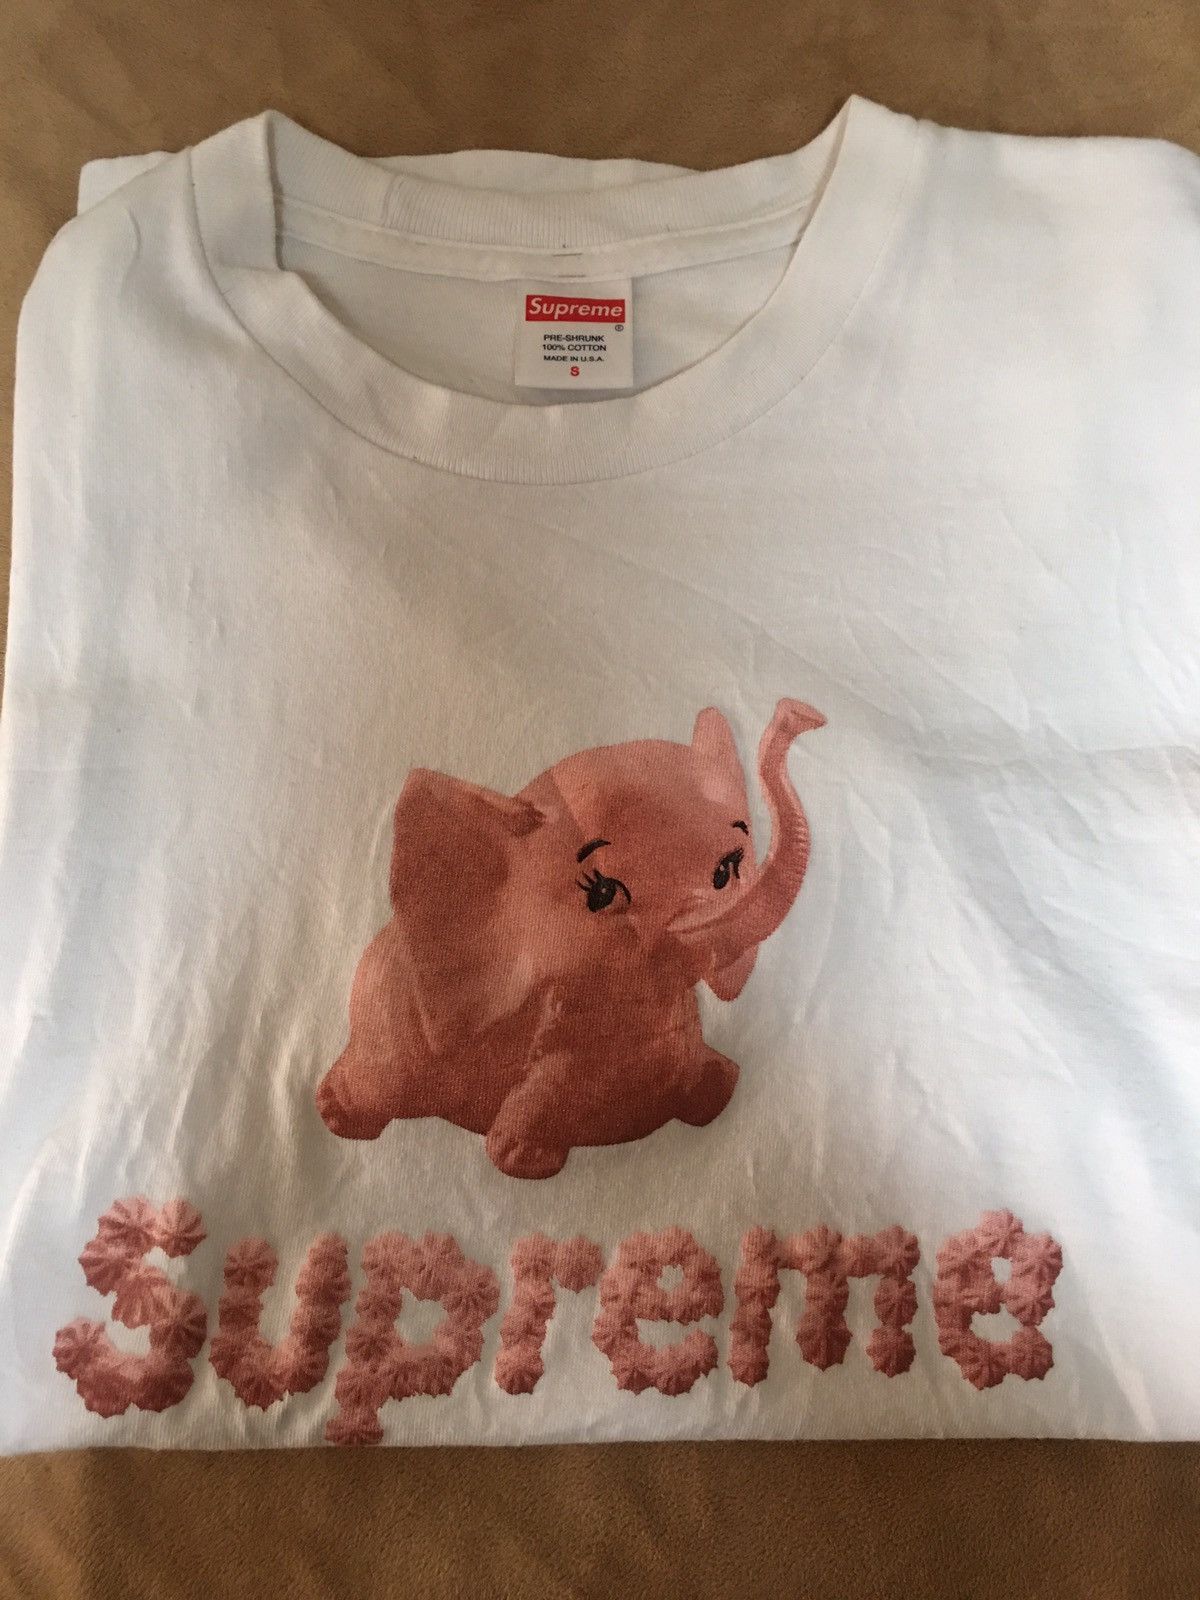 Supreme Pink Elephant T-shirt Size US S / EU 44-46 / 1 - 1 Preview